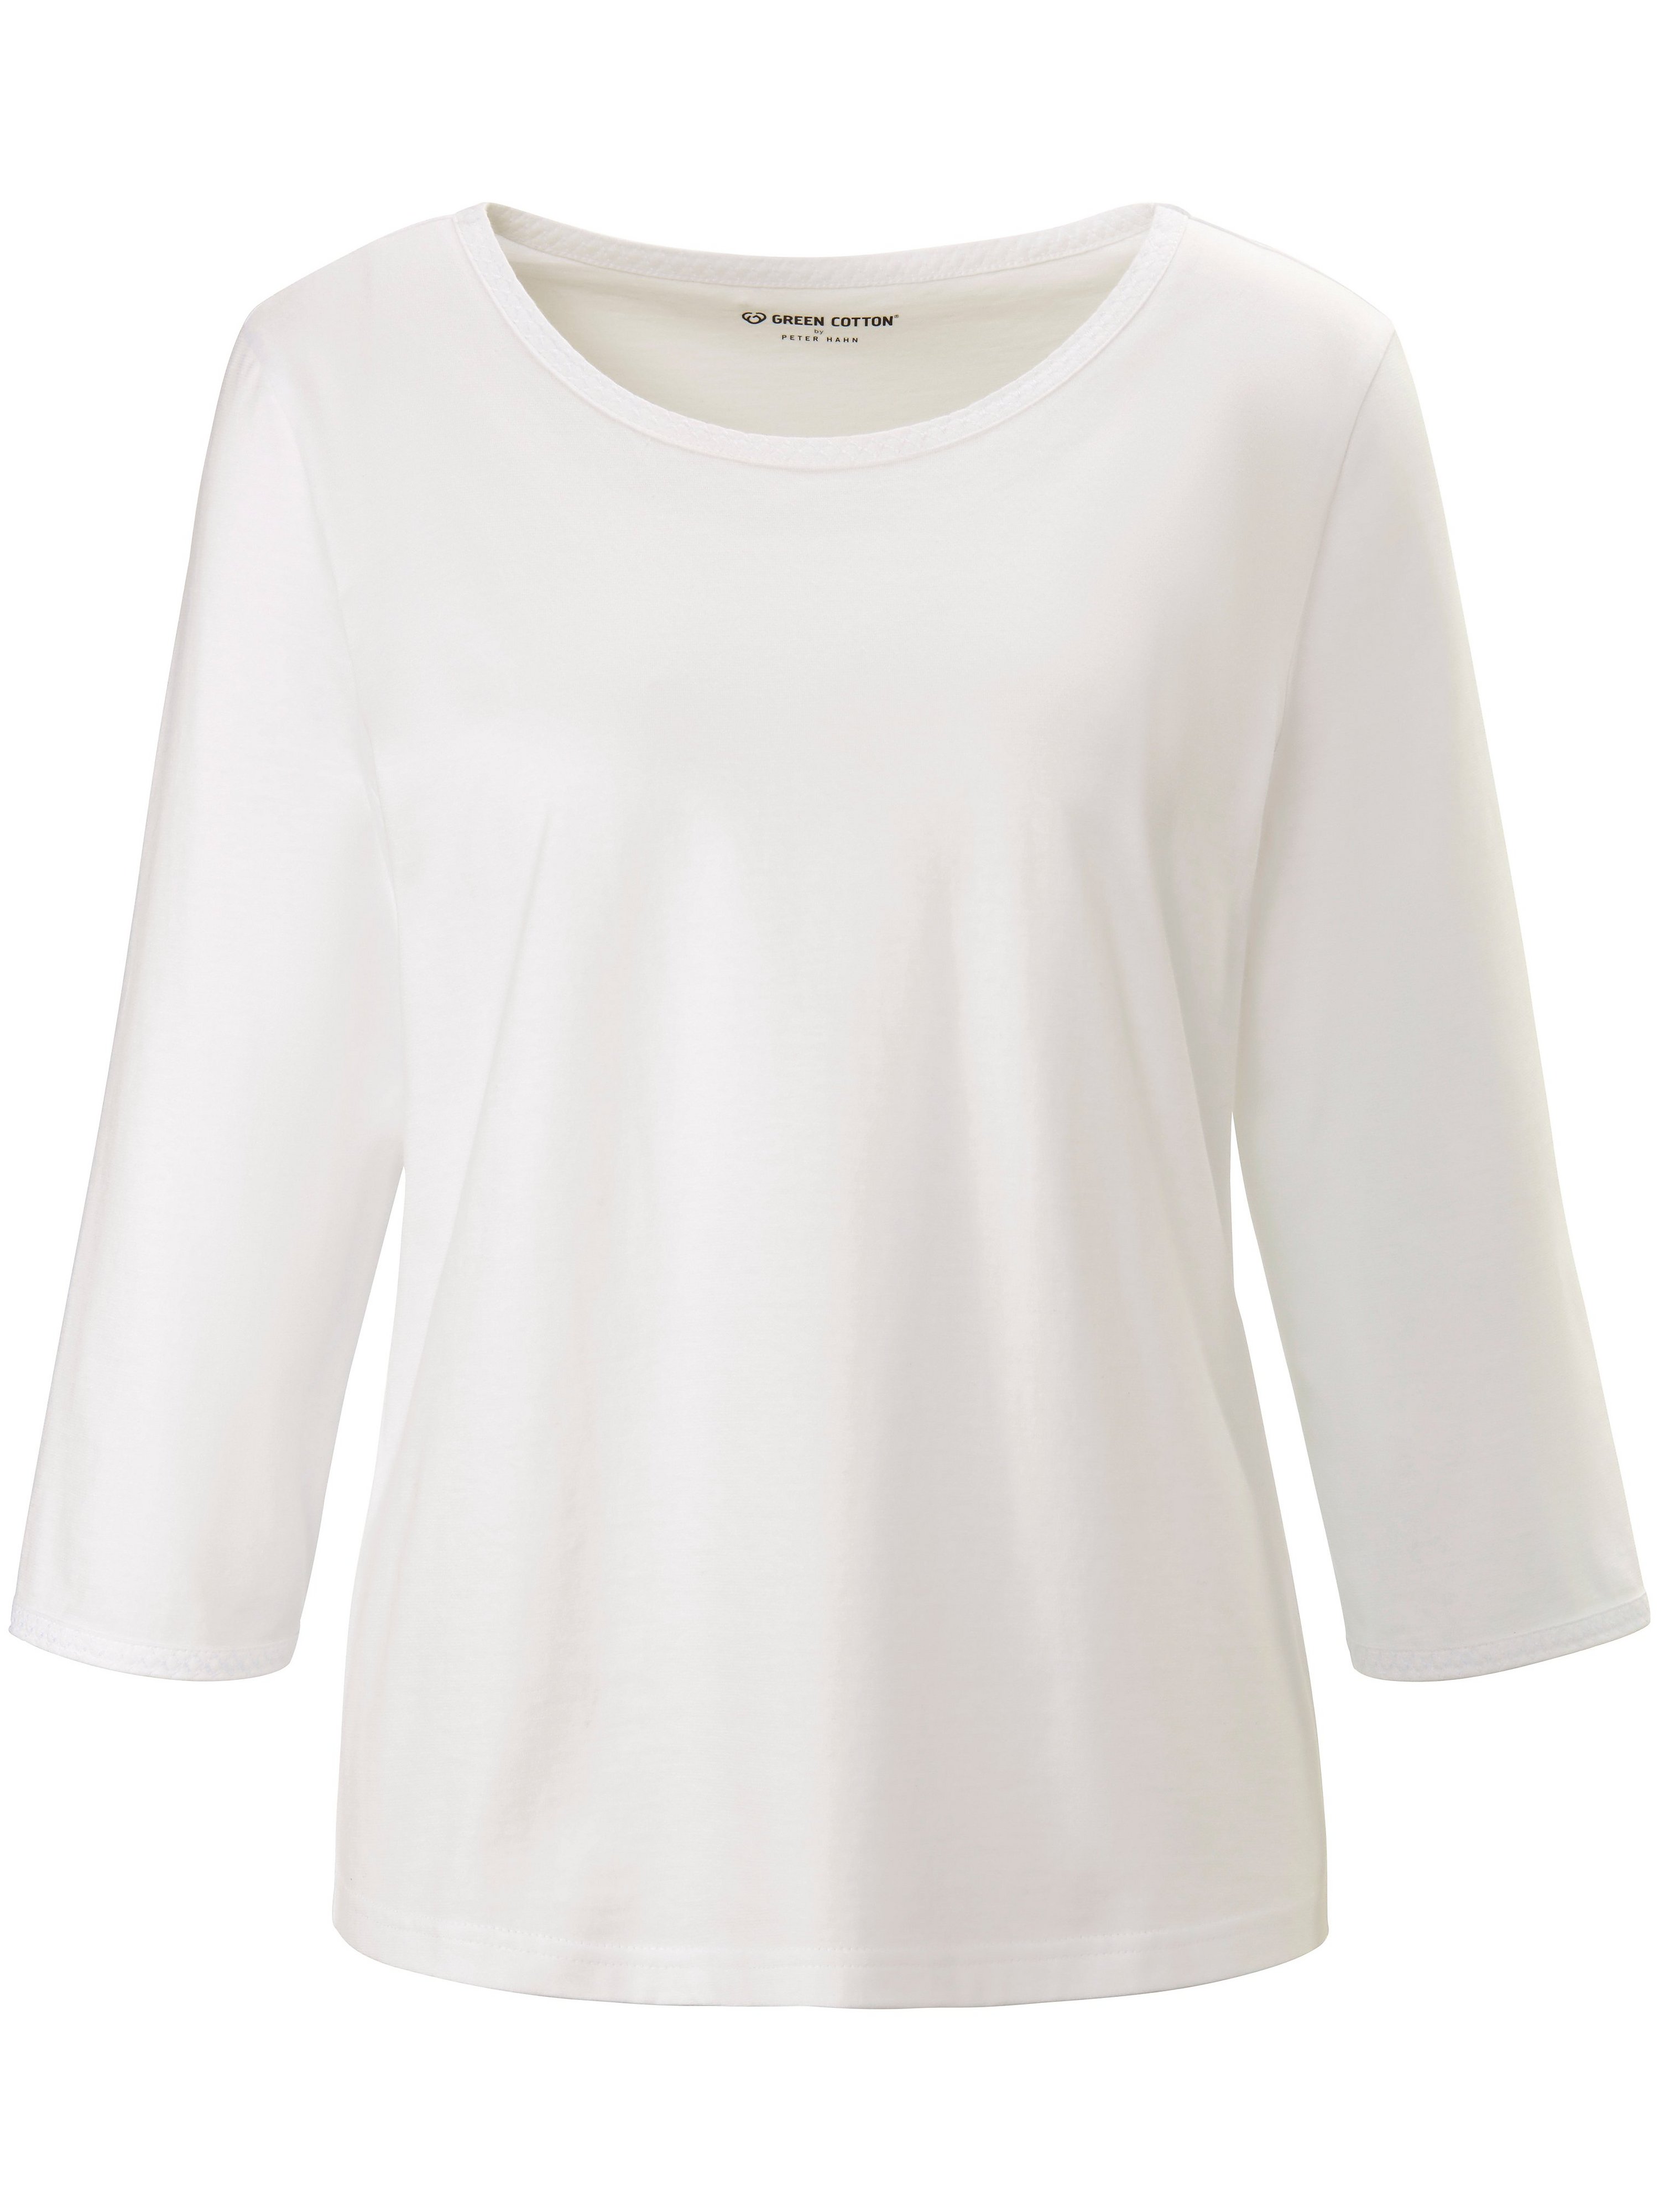 Le T-shirt 100% coton  Green Cotton blanc taille 44